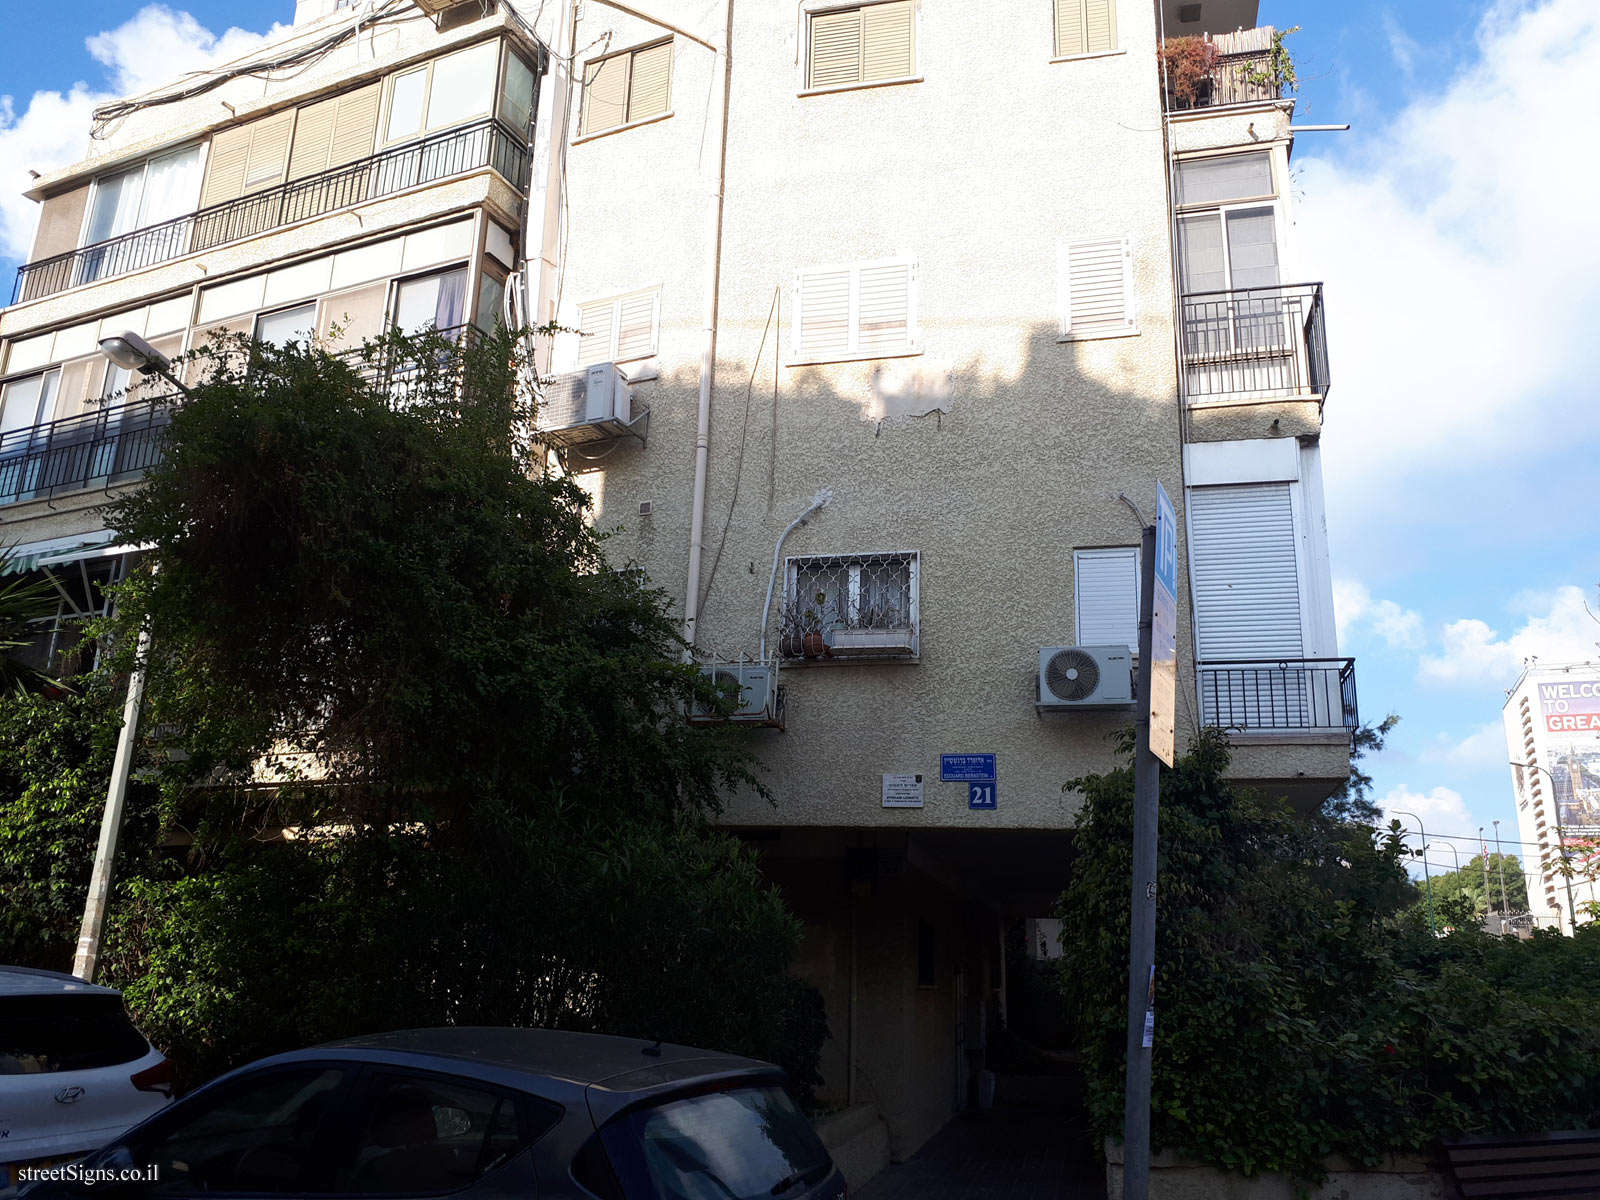 The house of Ephraim Lifshitz - Eduard Bernstein St 21, Tel Aviv-Yafo